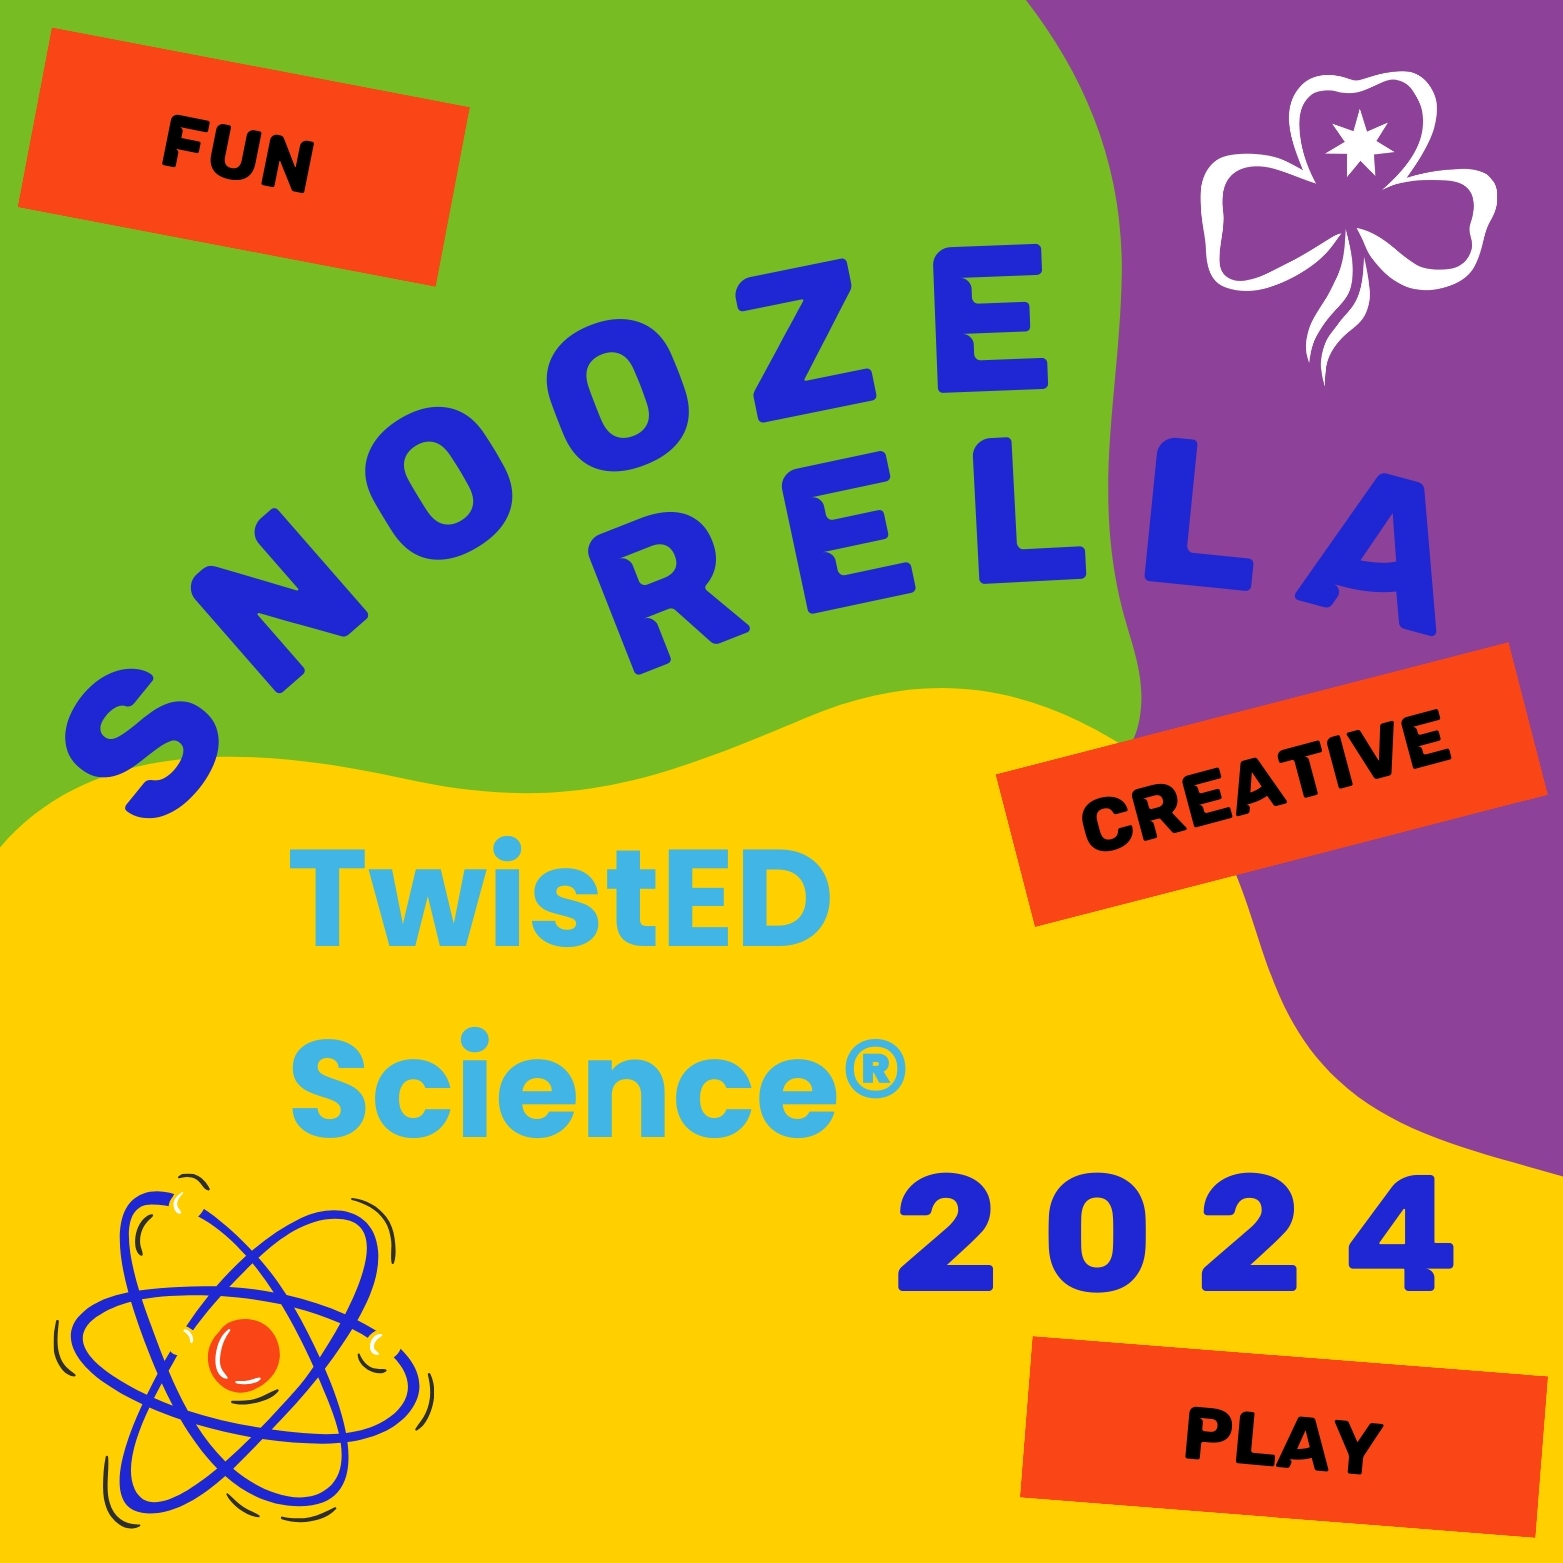 Snoozerella 2024 - TwistED Science®!